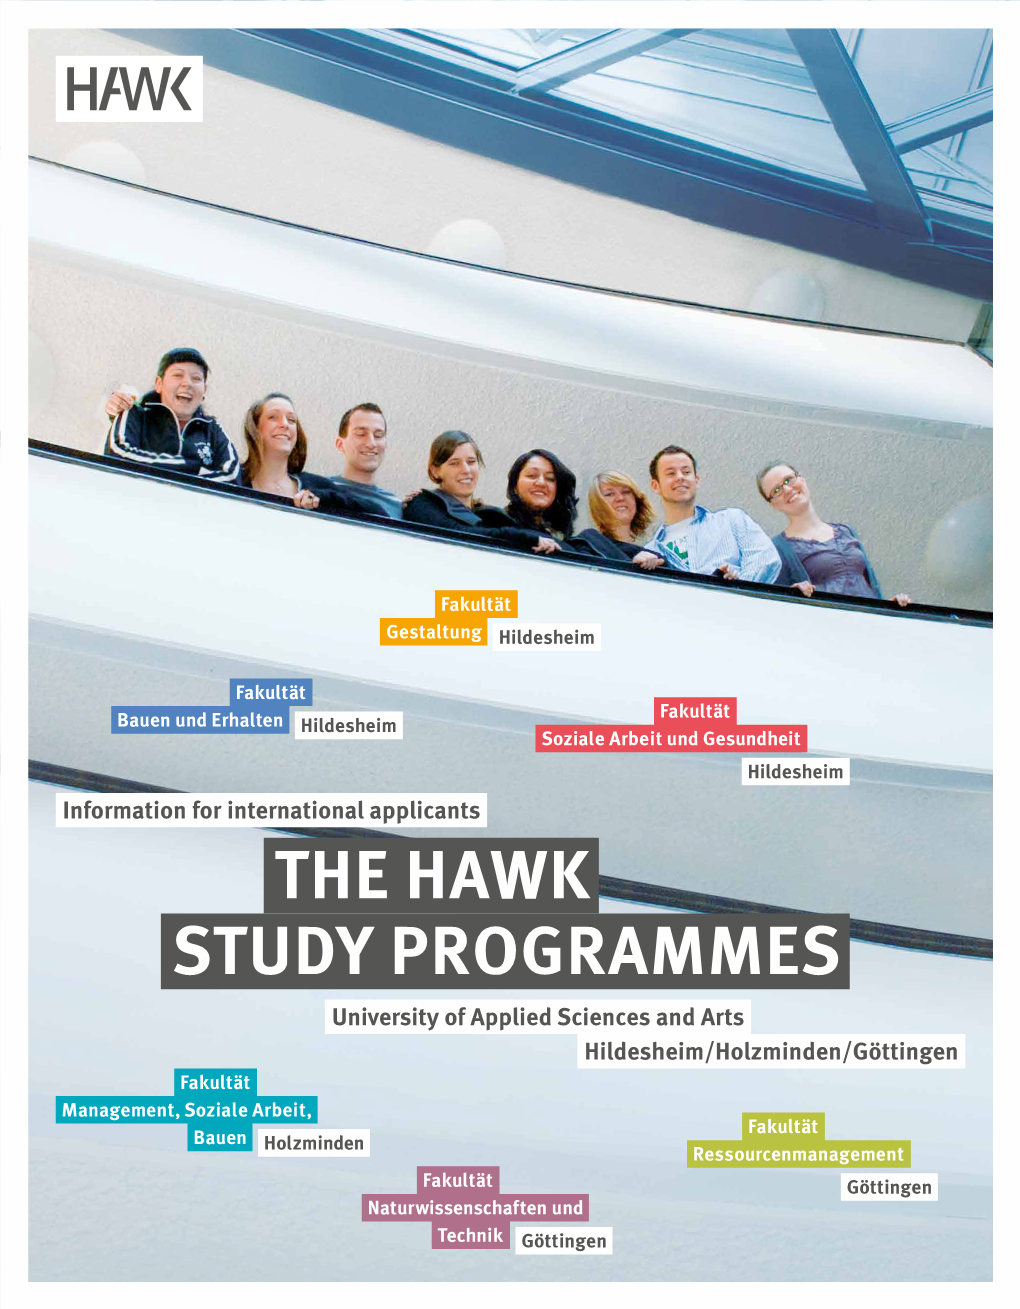 The Hawk Study Programmes